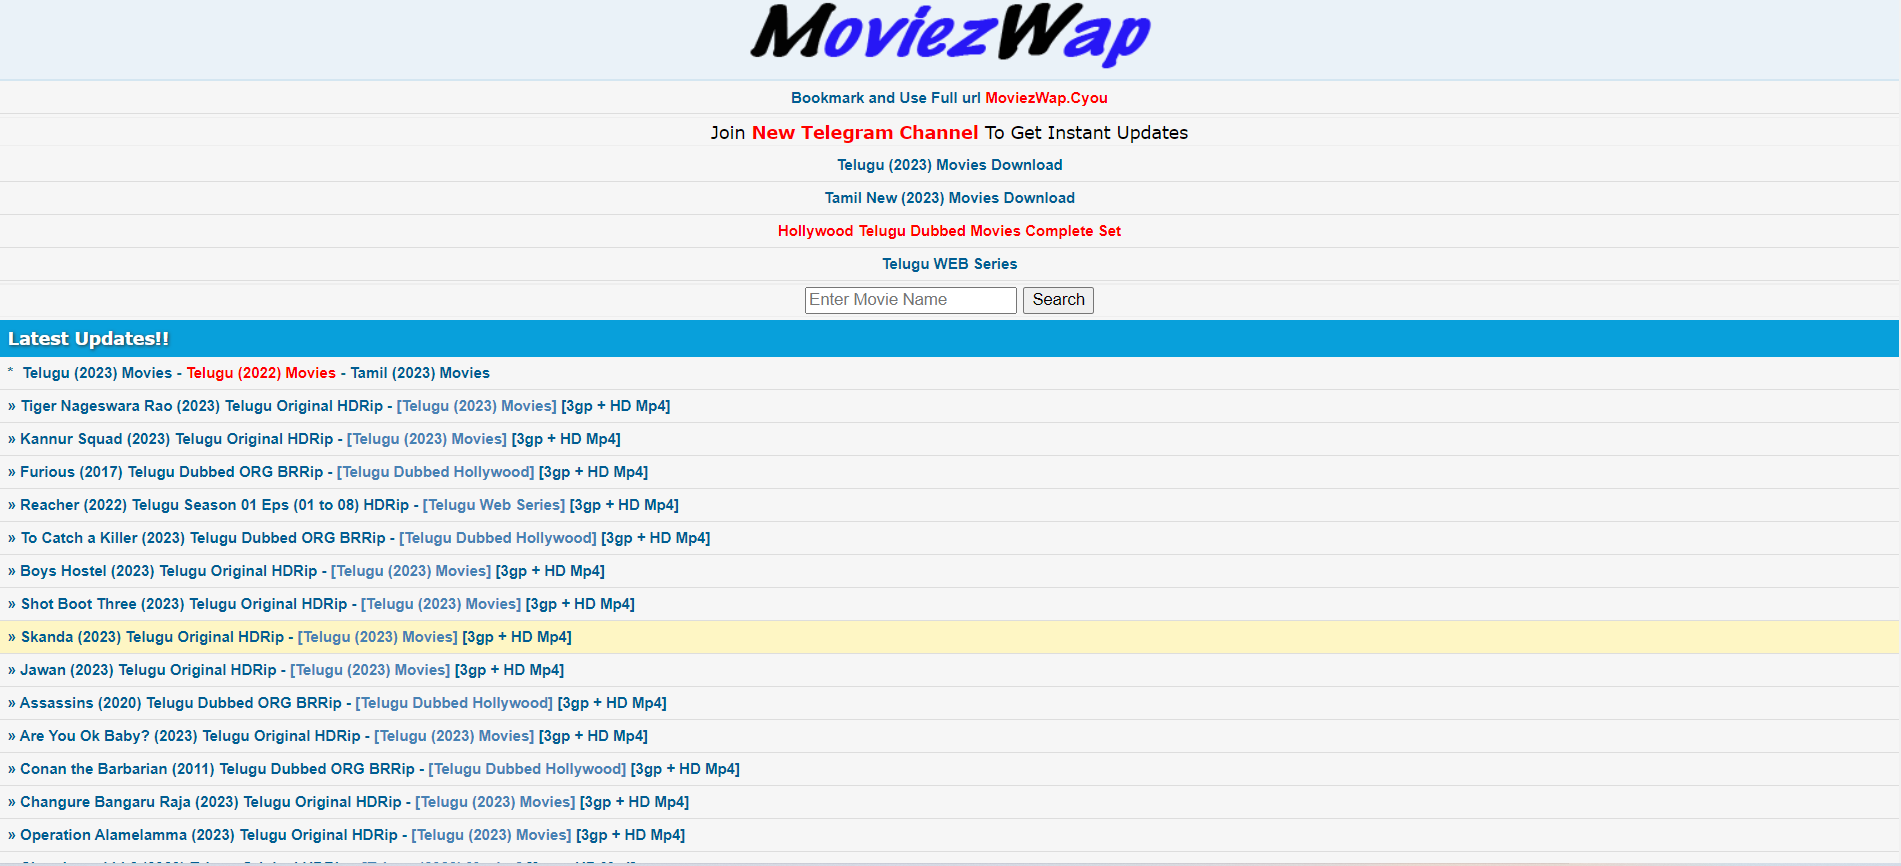 Exploring moviezwap org 2022 telugu: A Look at Telugu Movie Downloads